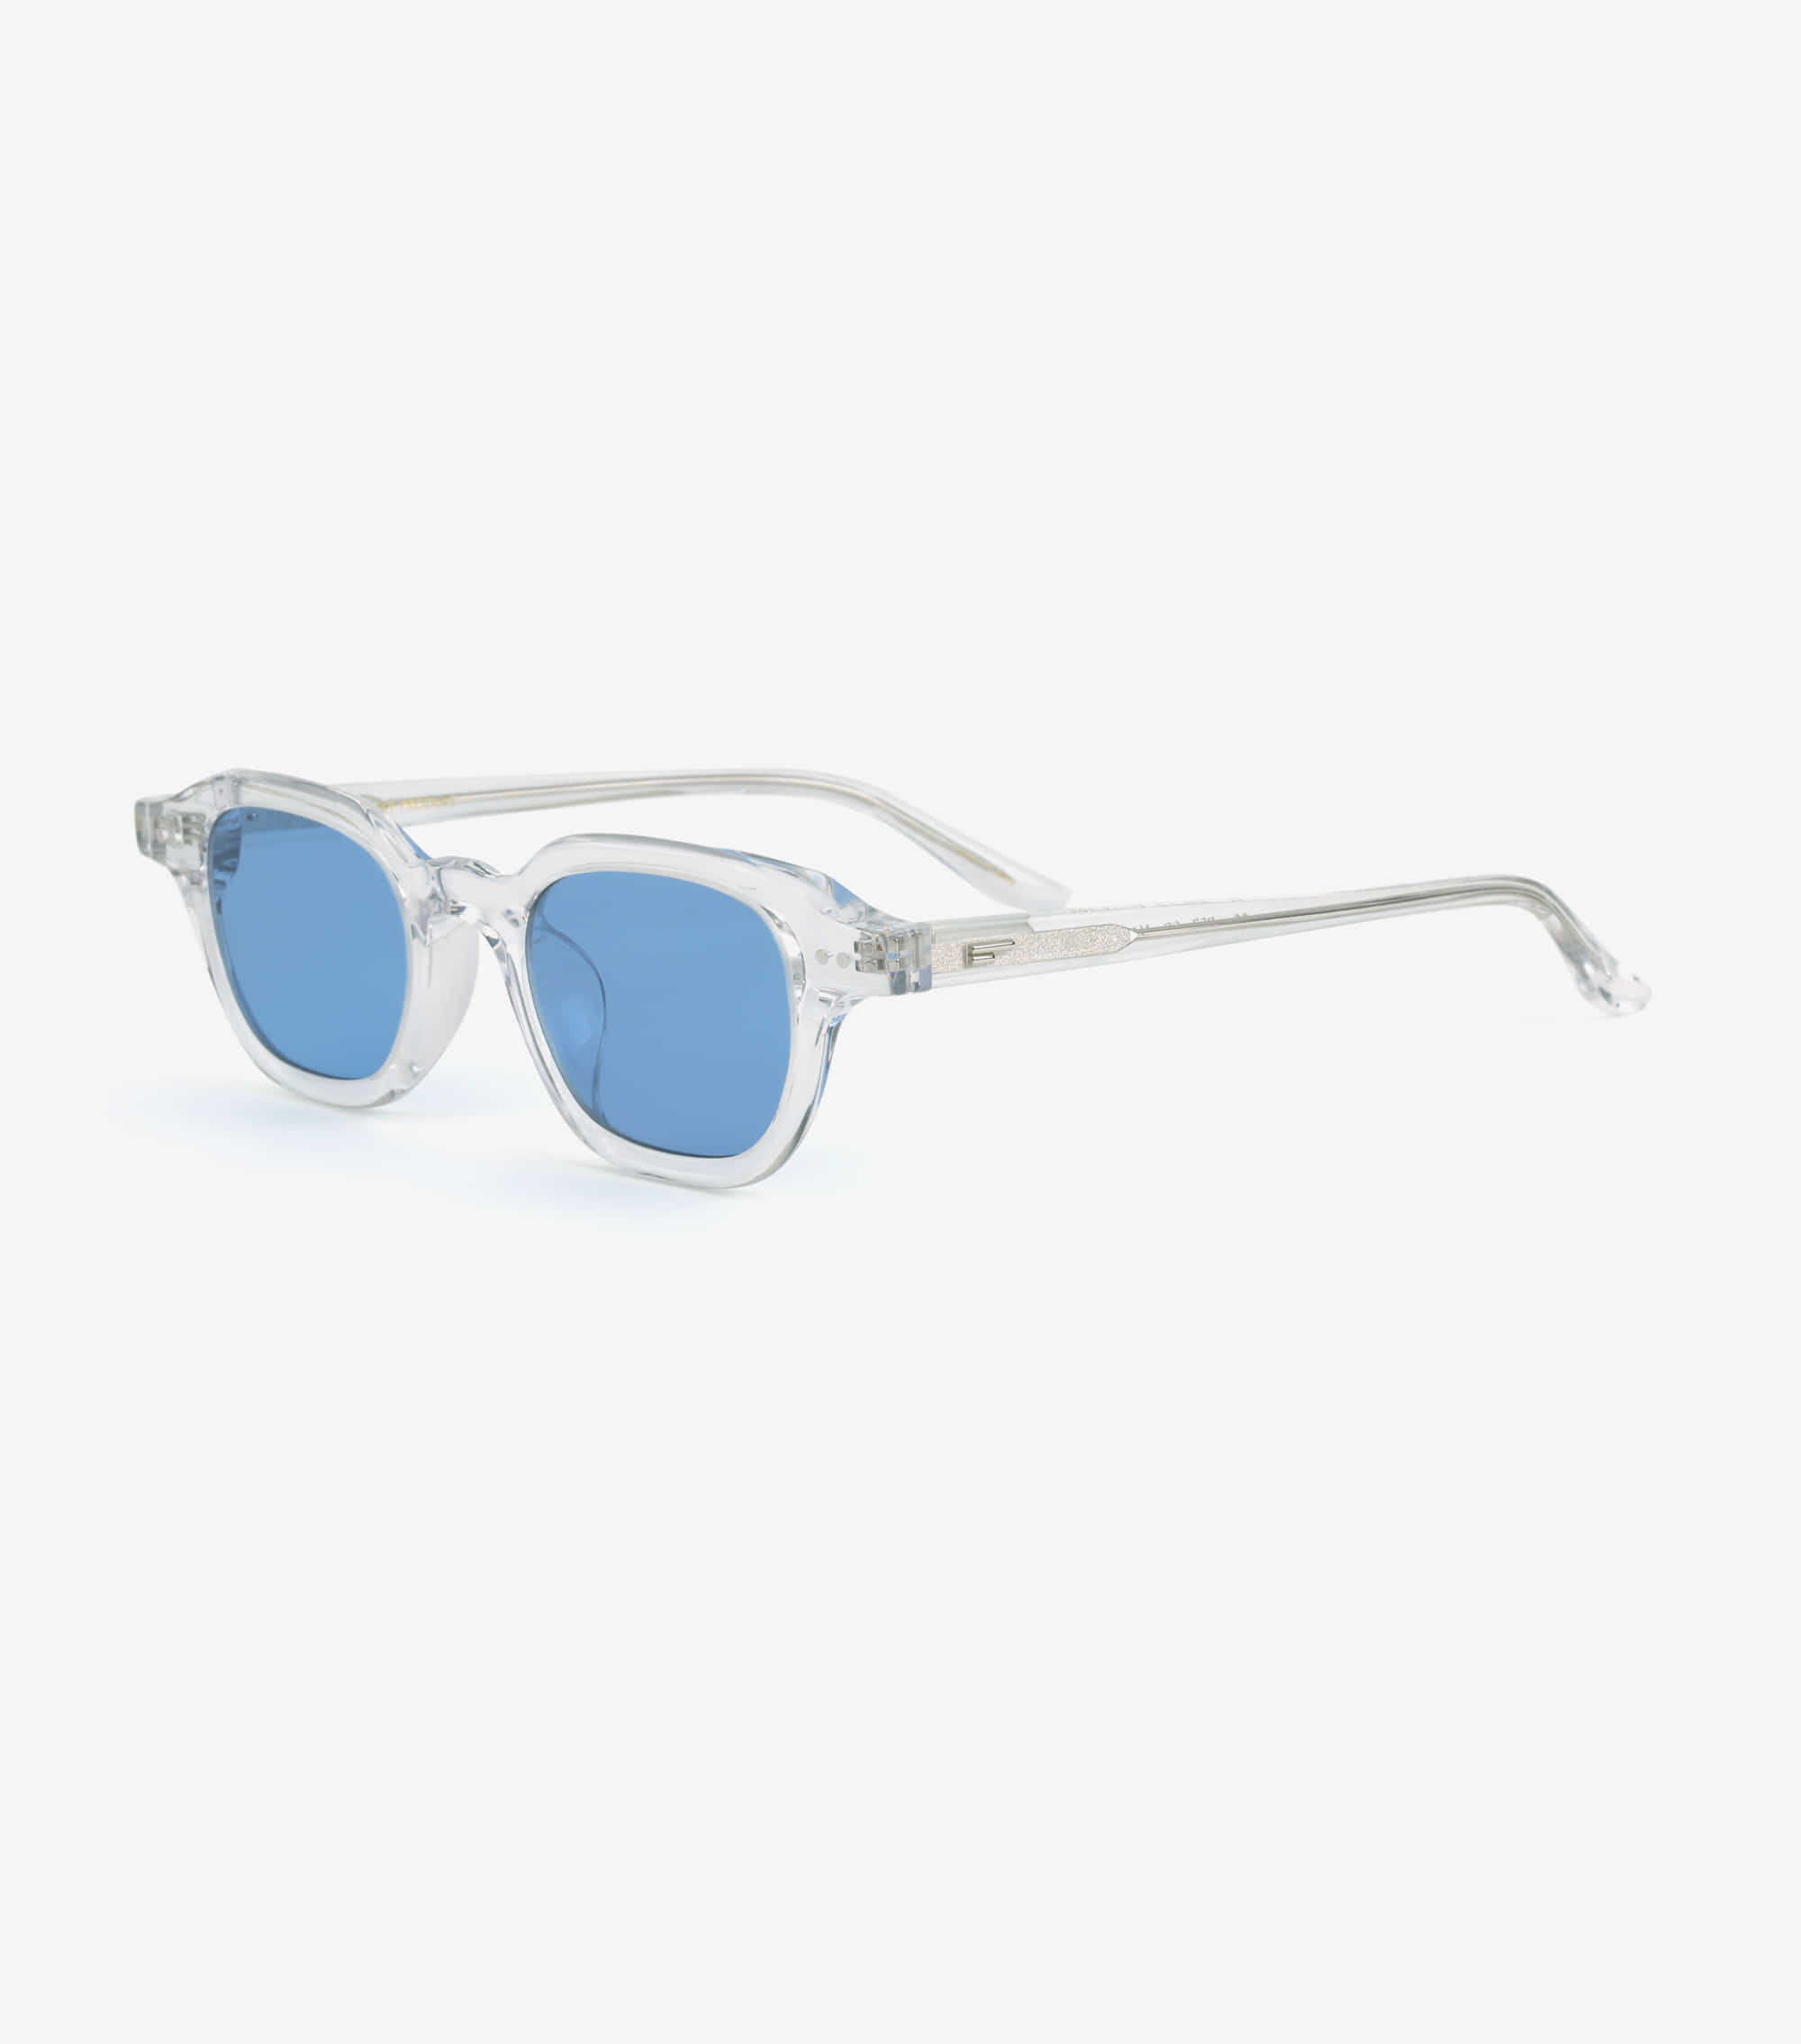 Projekt Produkt RS3 vintage square sunglasses col. transparent